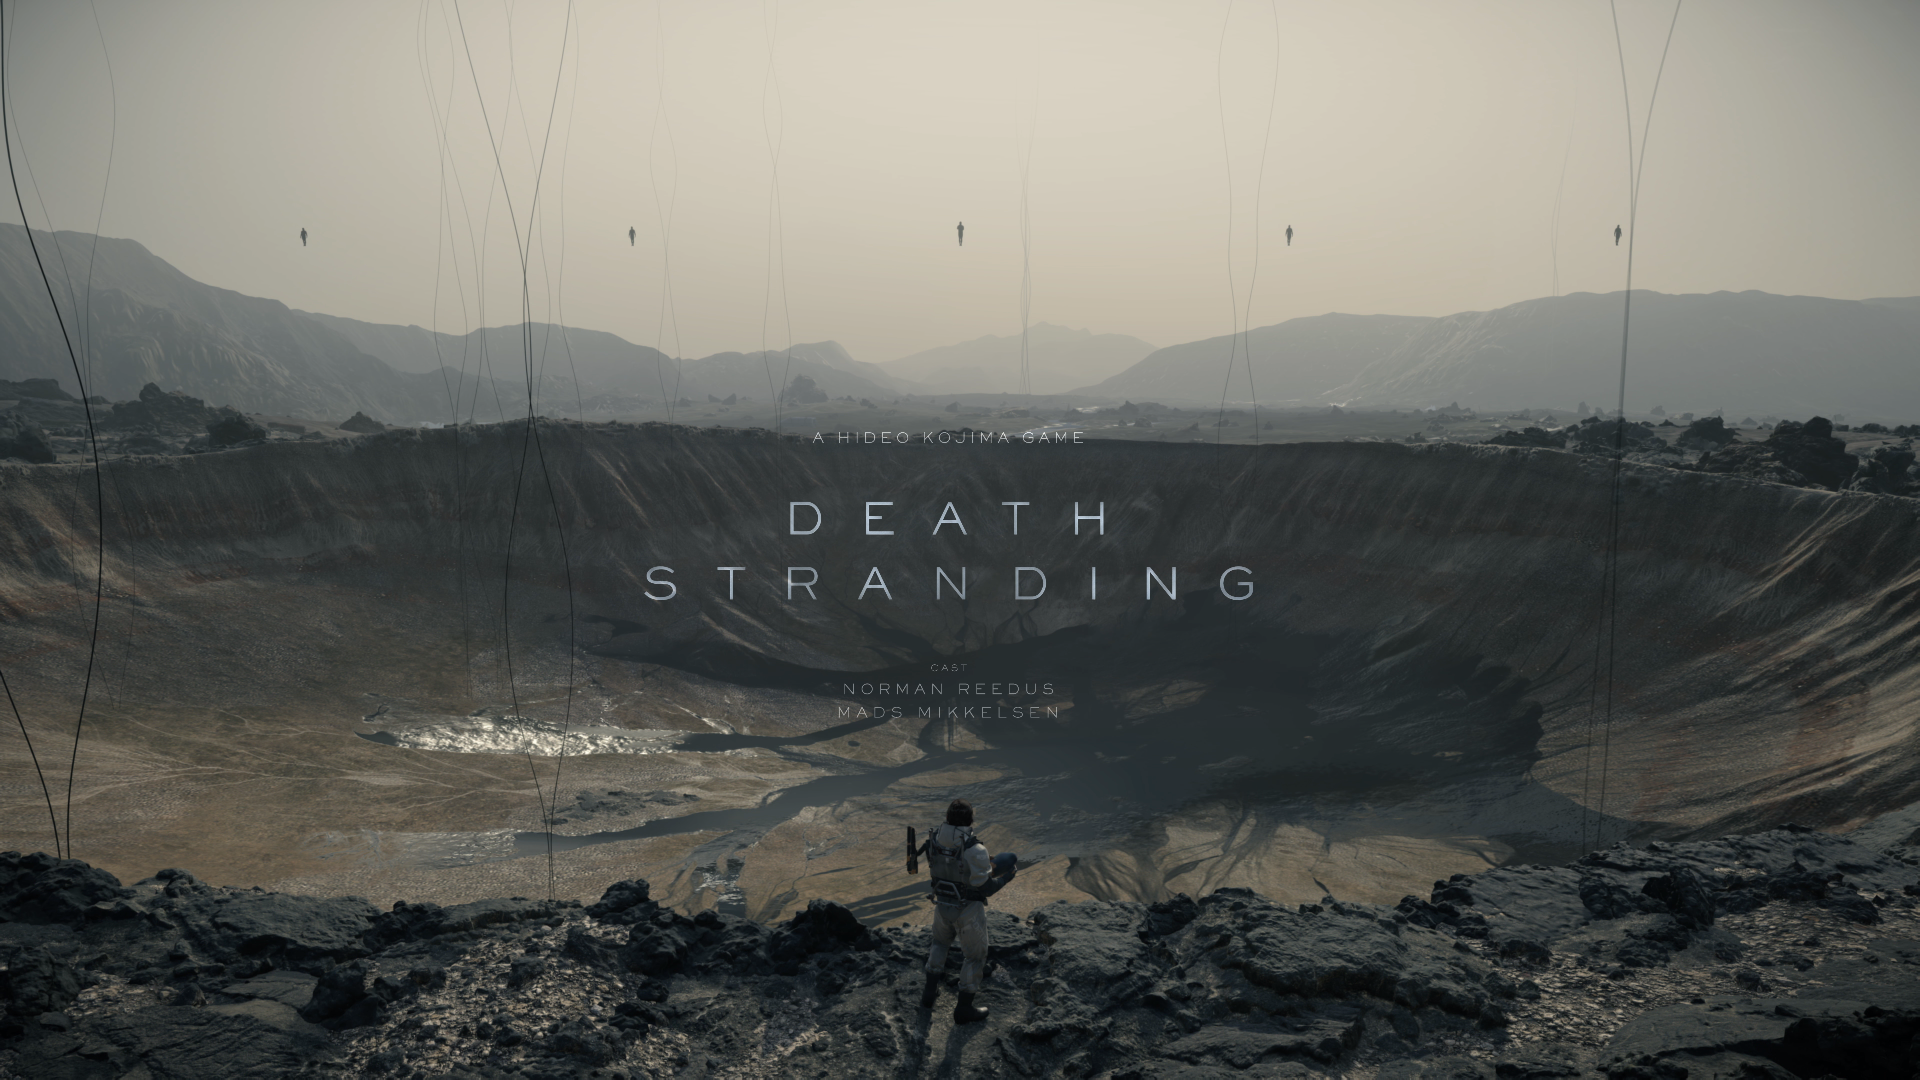 Death Stranding Director's Cut gets final trailer